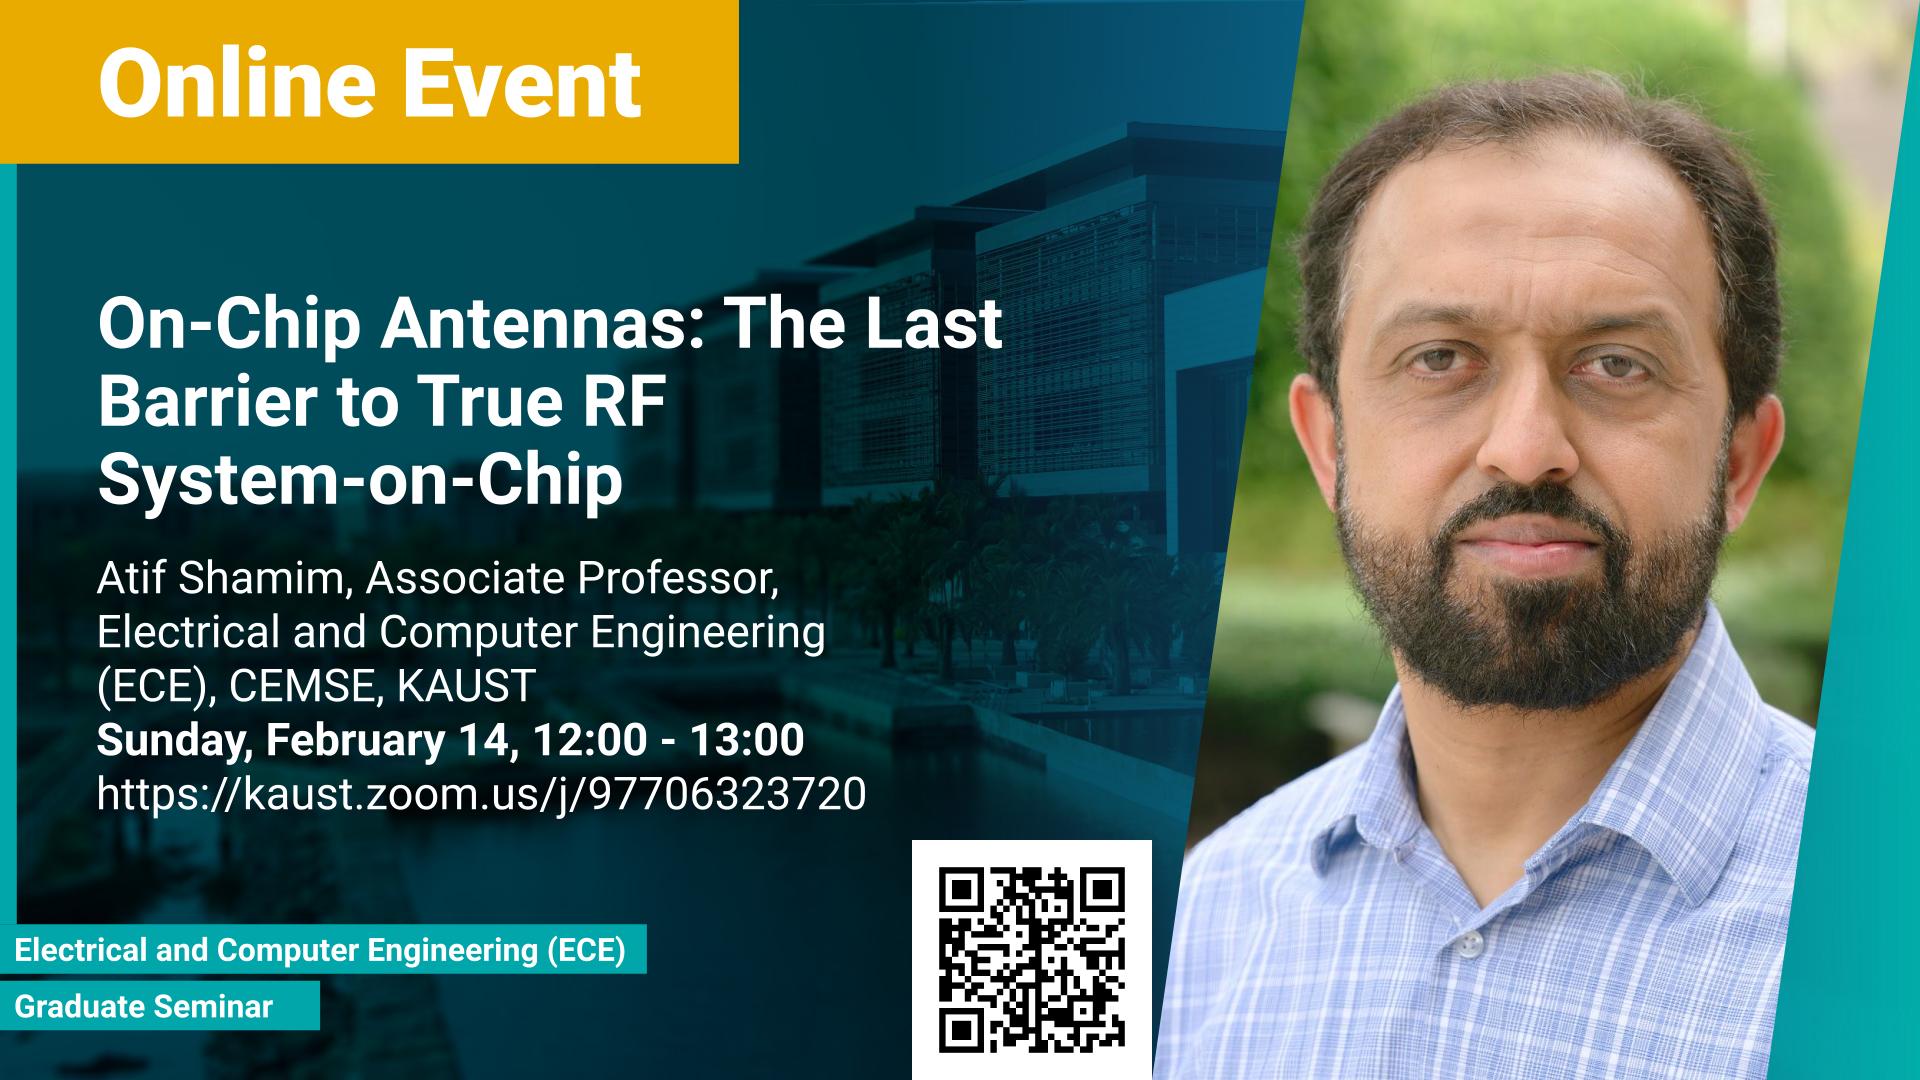 KAUST-CEMSE-ECE-Graduate-Seminar-On-Chip Antennas-The-Last-Barrier-to-True-RF-System-on-Chip-Atif-Shamim.jpg